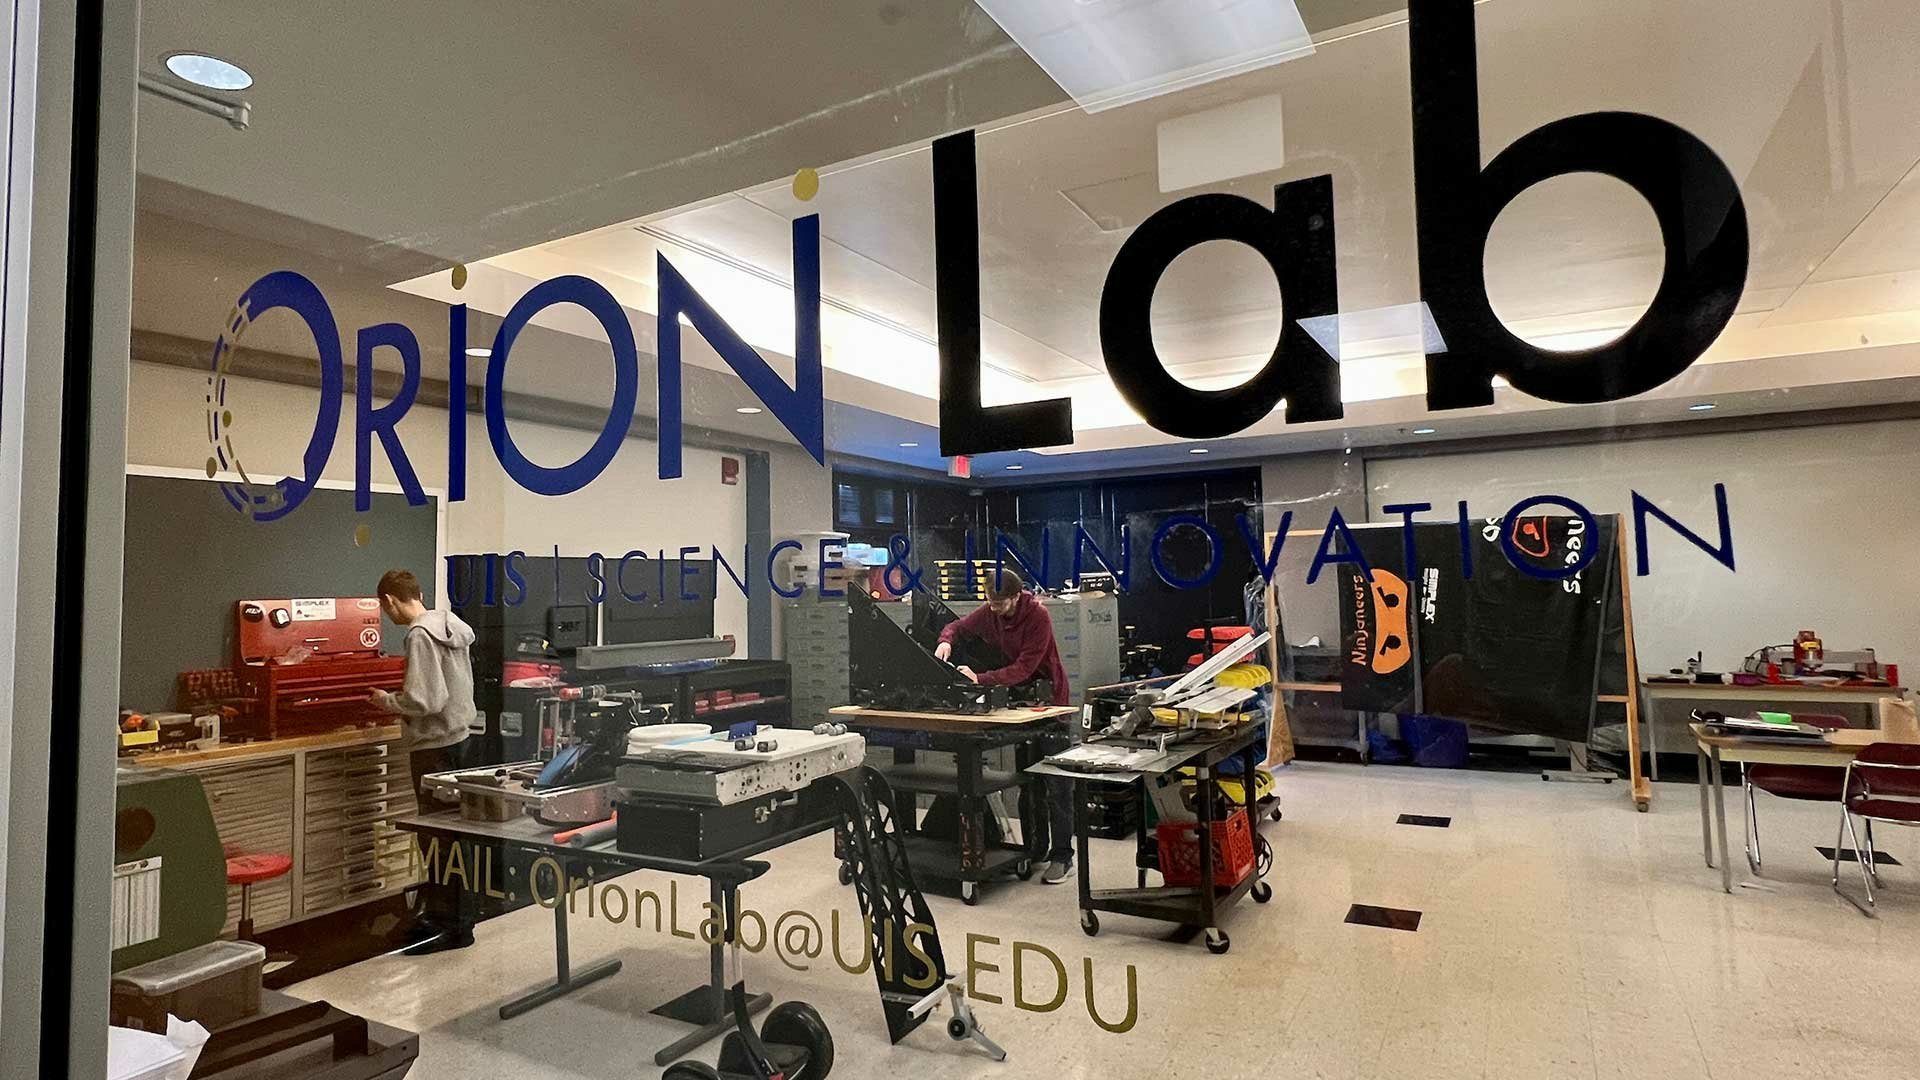 orion lab window